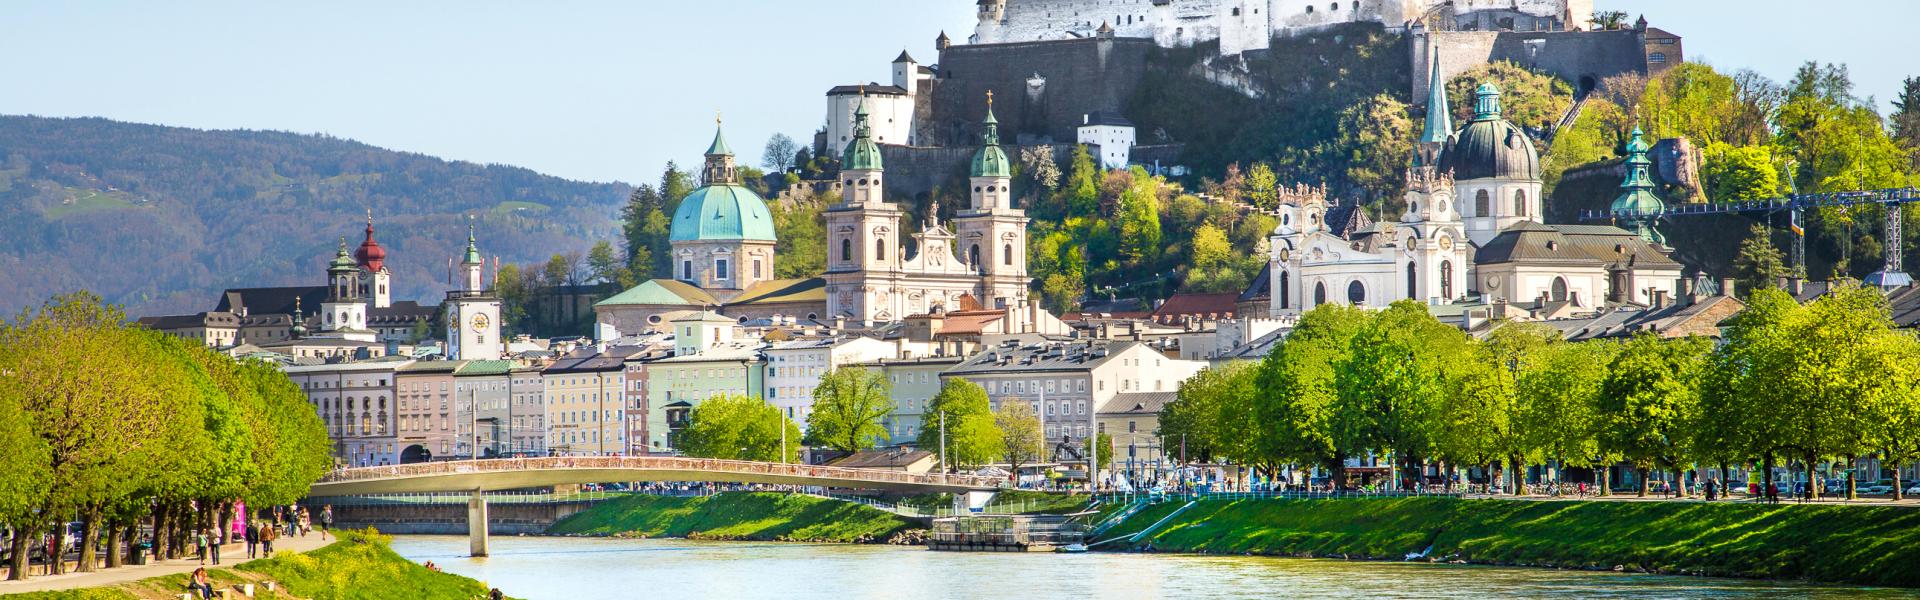 Noclegi i apartamenty wakacyjne w Salzburgu - Casamundo